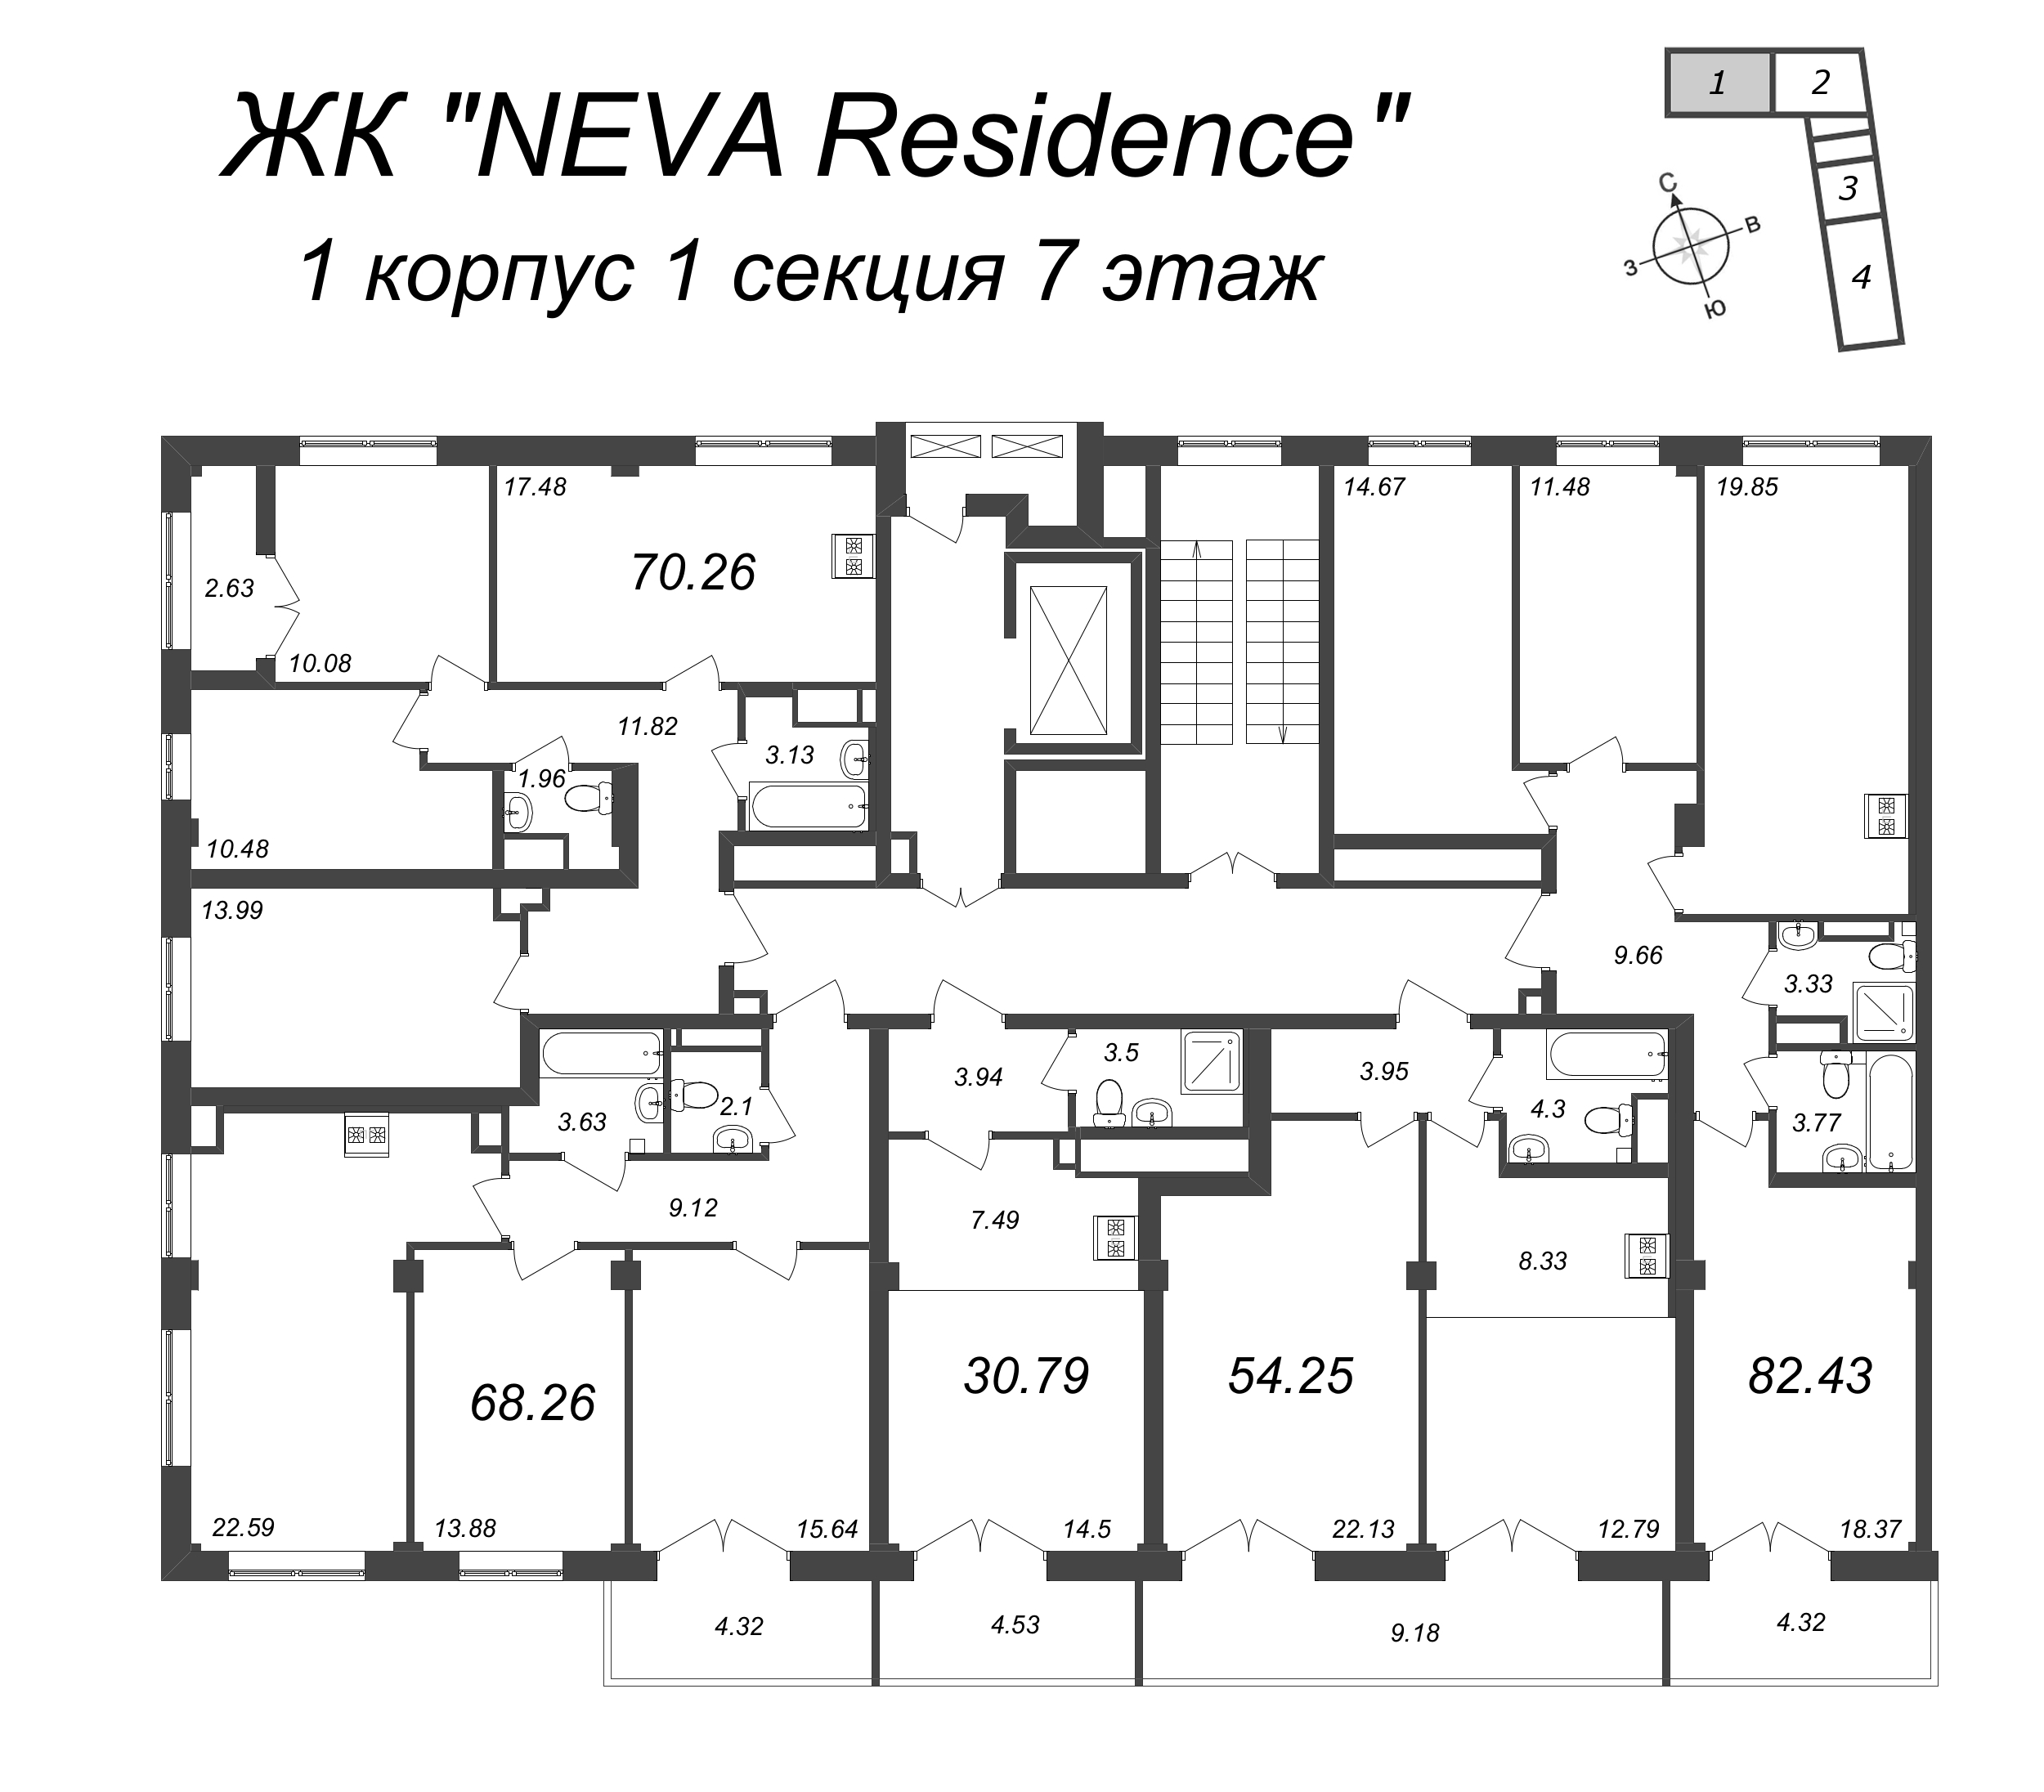 3-комнатная (Евро) квартира, 68.26 м² - планировка этажа